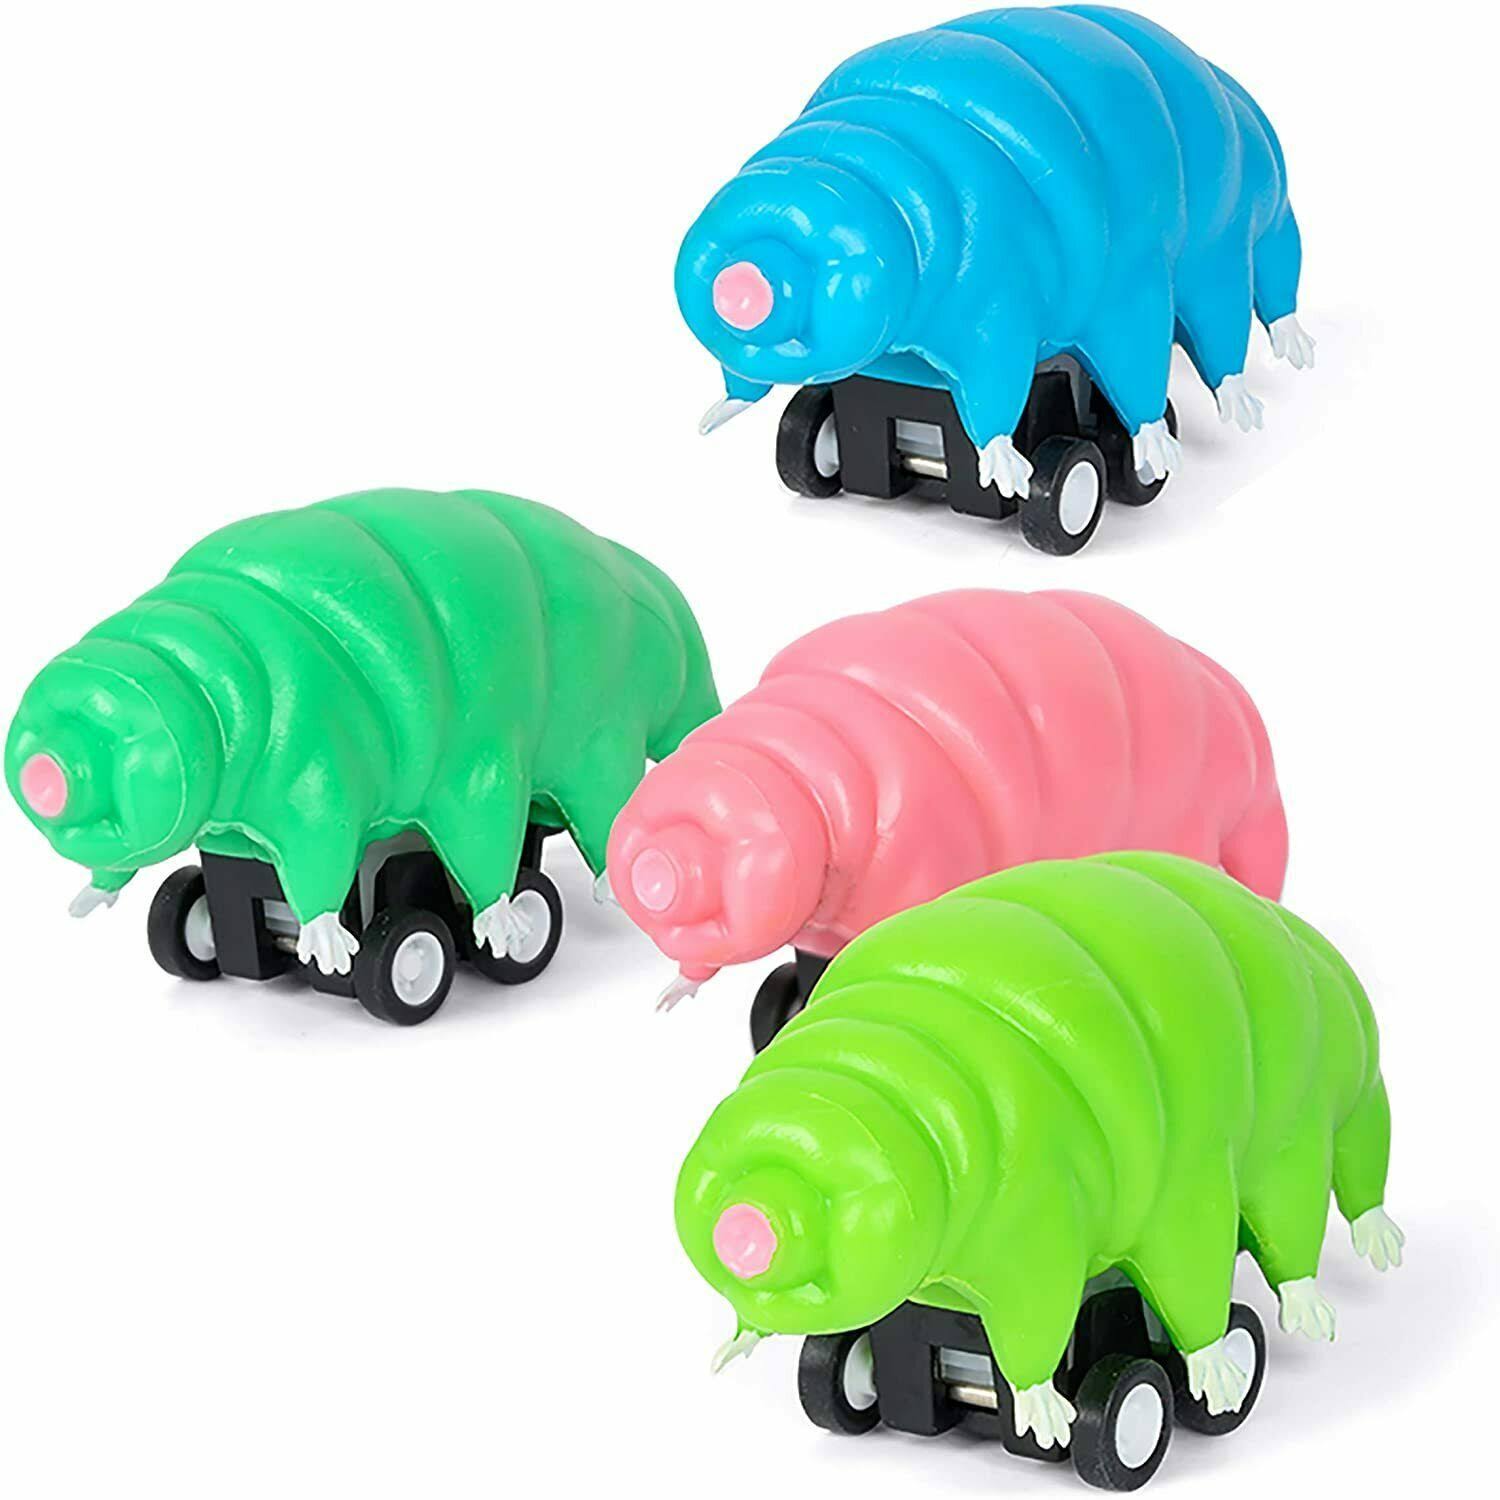 Archie McPhee Racing Tardigrades Toy